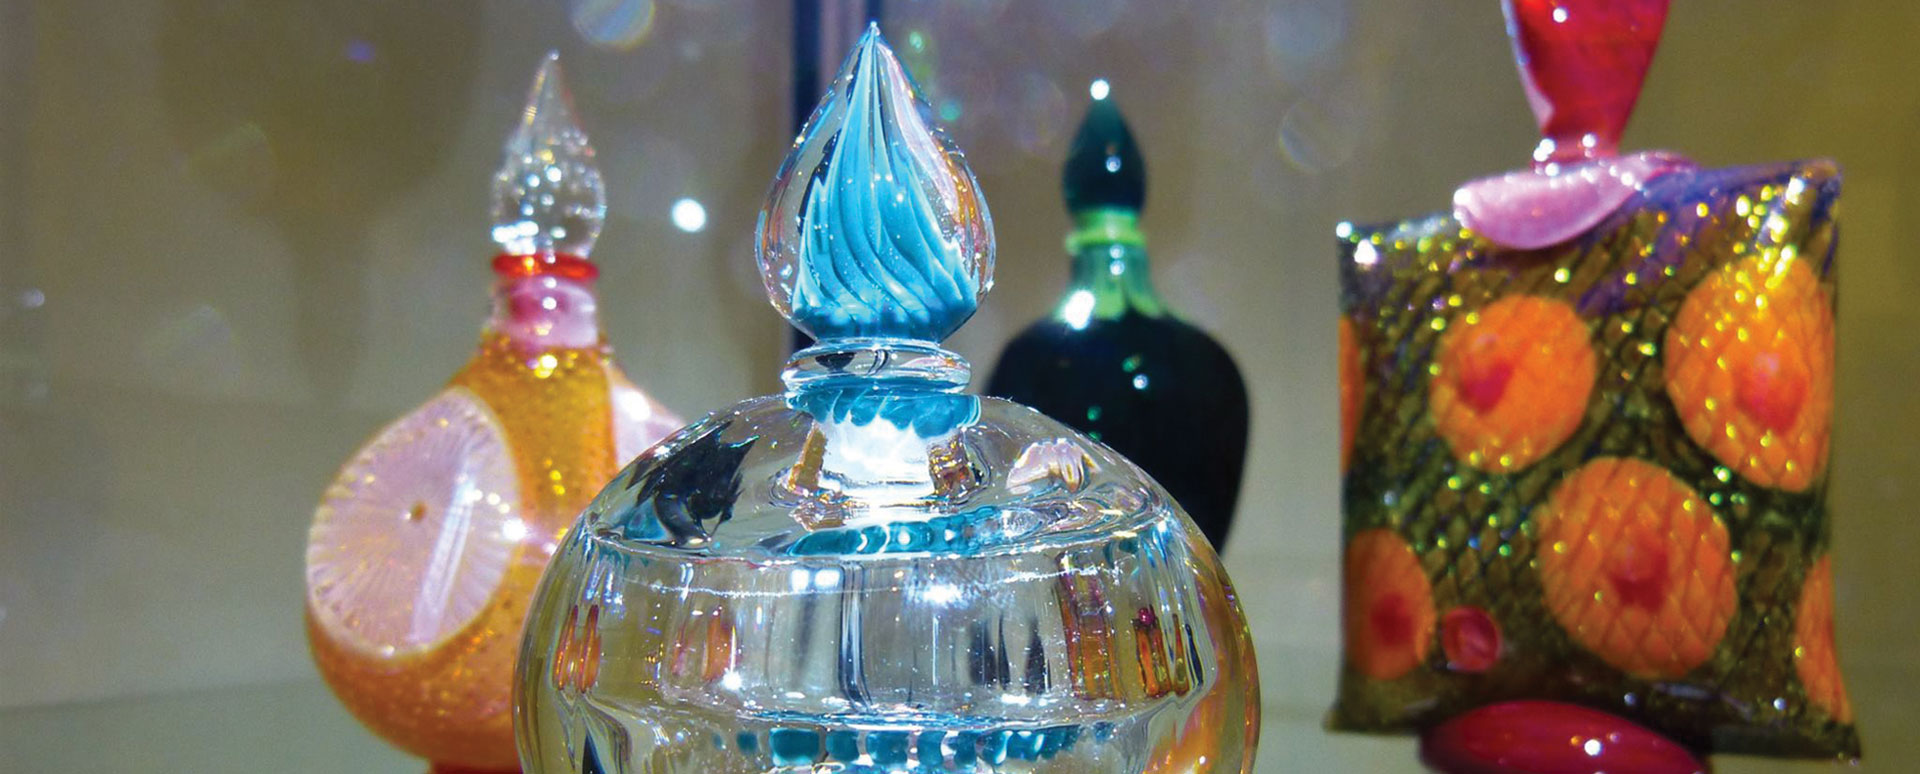 Work of Art Community Gallery - Display of Glass Bottles